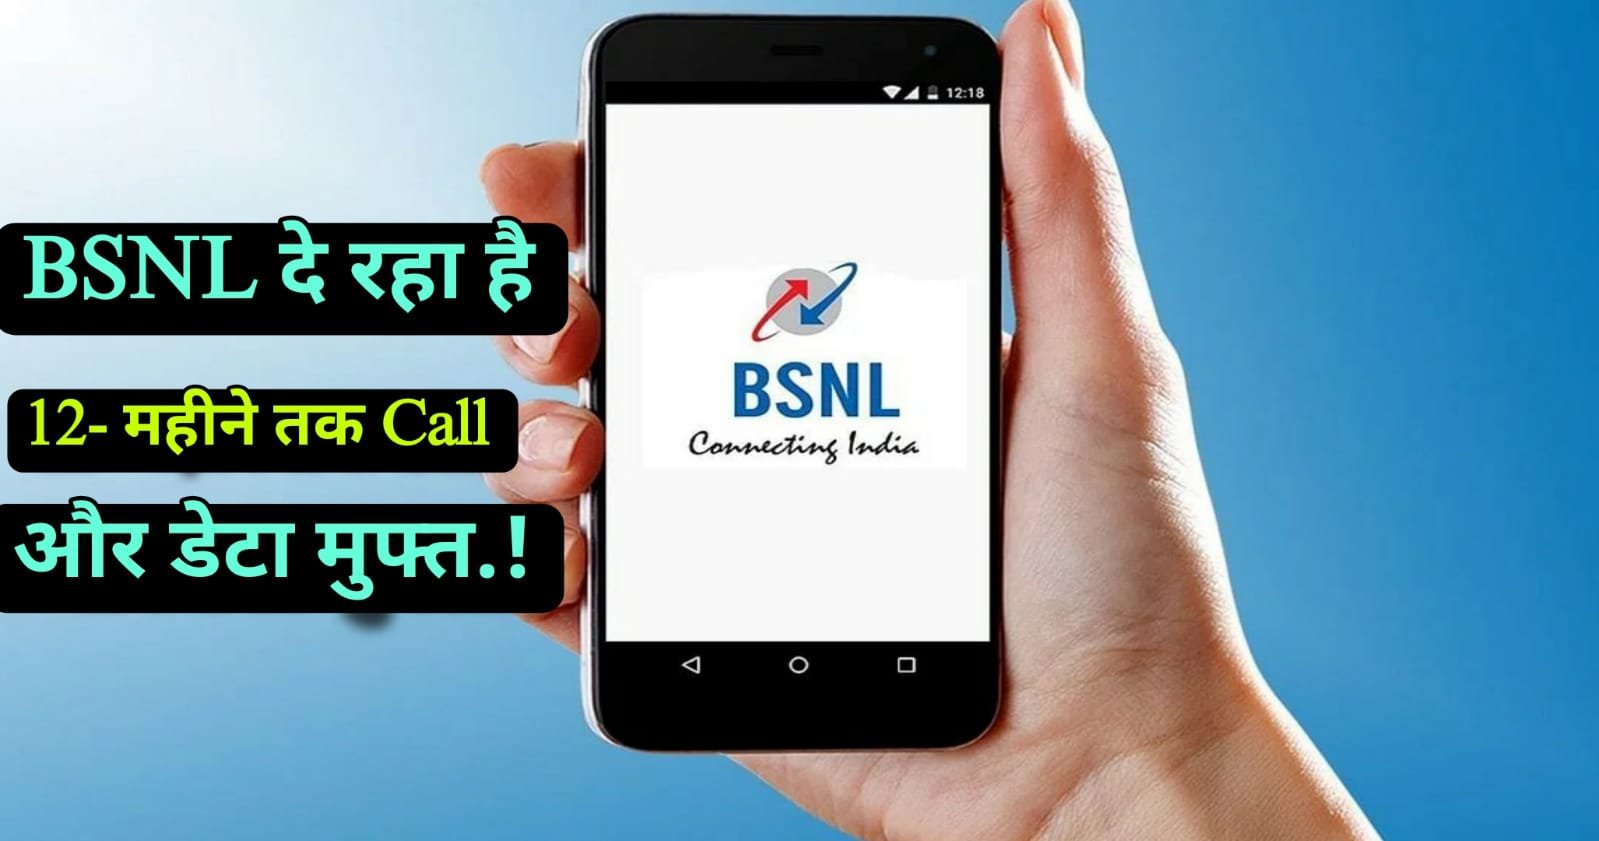 BSNL Recharge: Bsnl का धांसू प्लान साल भर तक इन्डेटरनेट डेटा, calling सब फ्री!